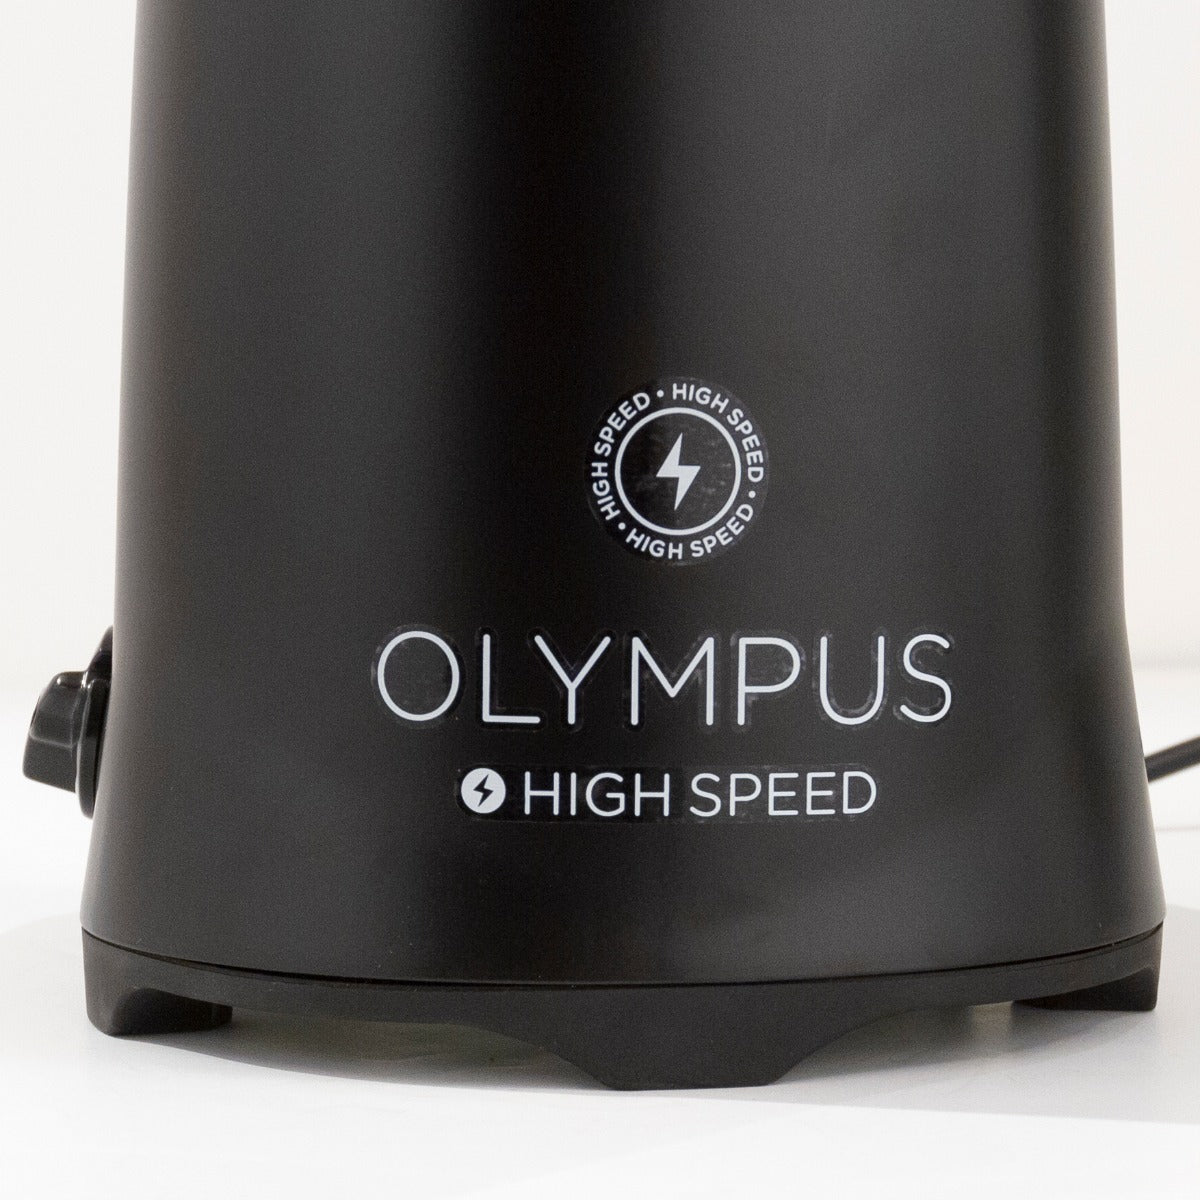 "OLYMPUS HIGH SPEED" logo on grinder base